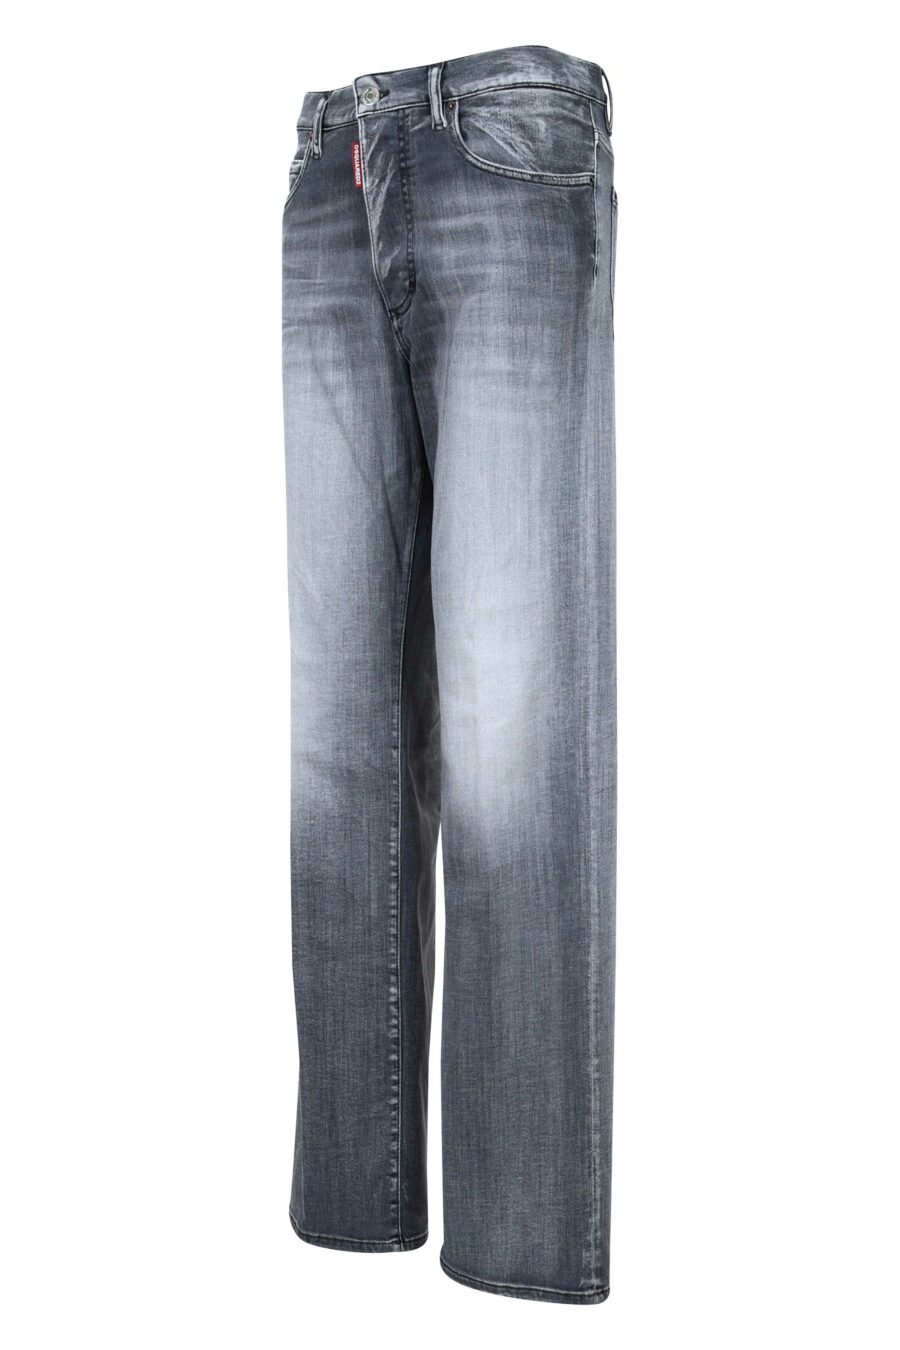 Jeans "San Diego jean" black worn - 8054148230845 1